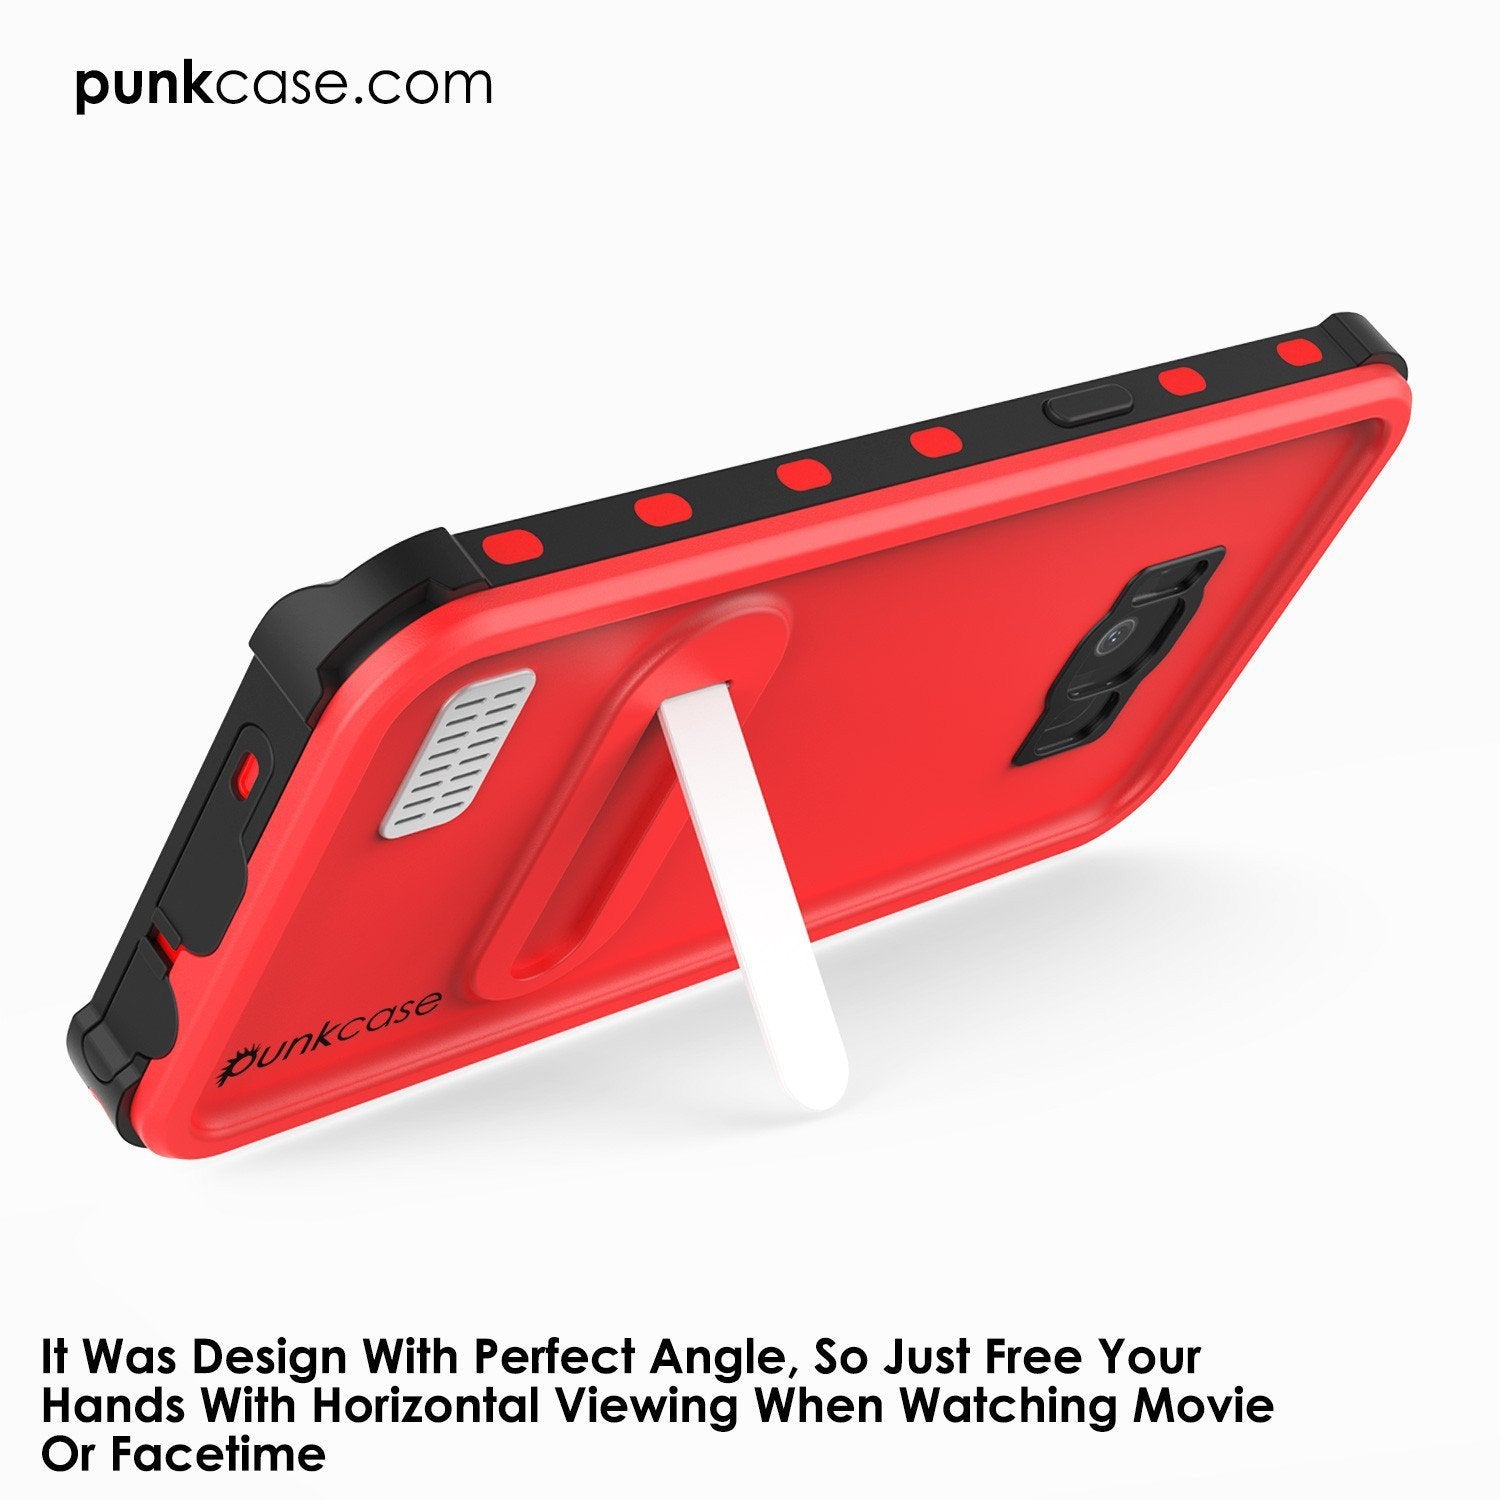 Galaxy S8 Punkcase KickStud Series W/Built-In Kickstand Case [Red]